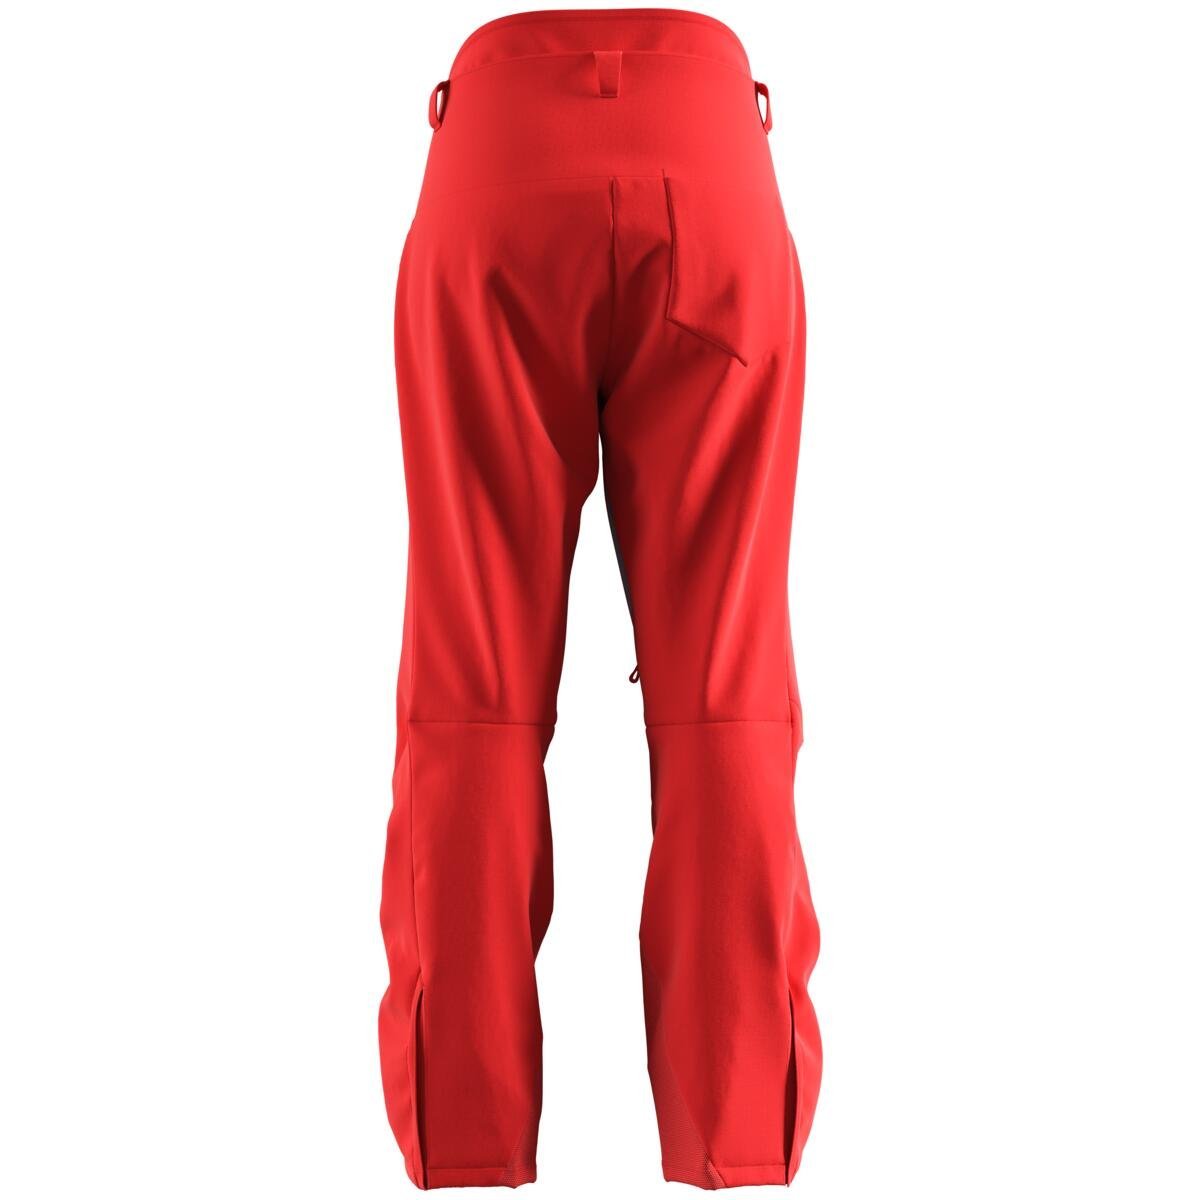 Nohavice Salomon Brilliant Pants (štandardná dĺžka) W - červená